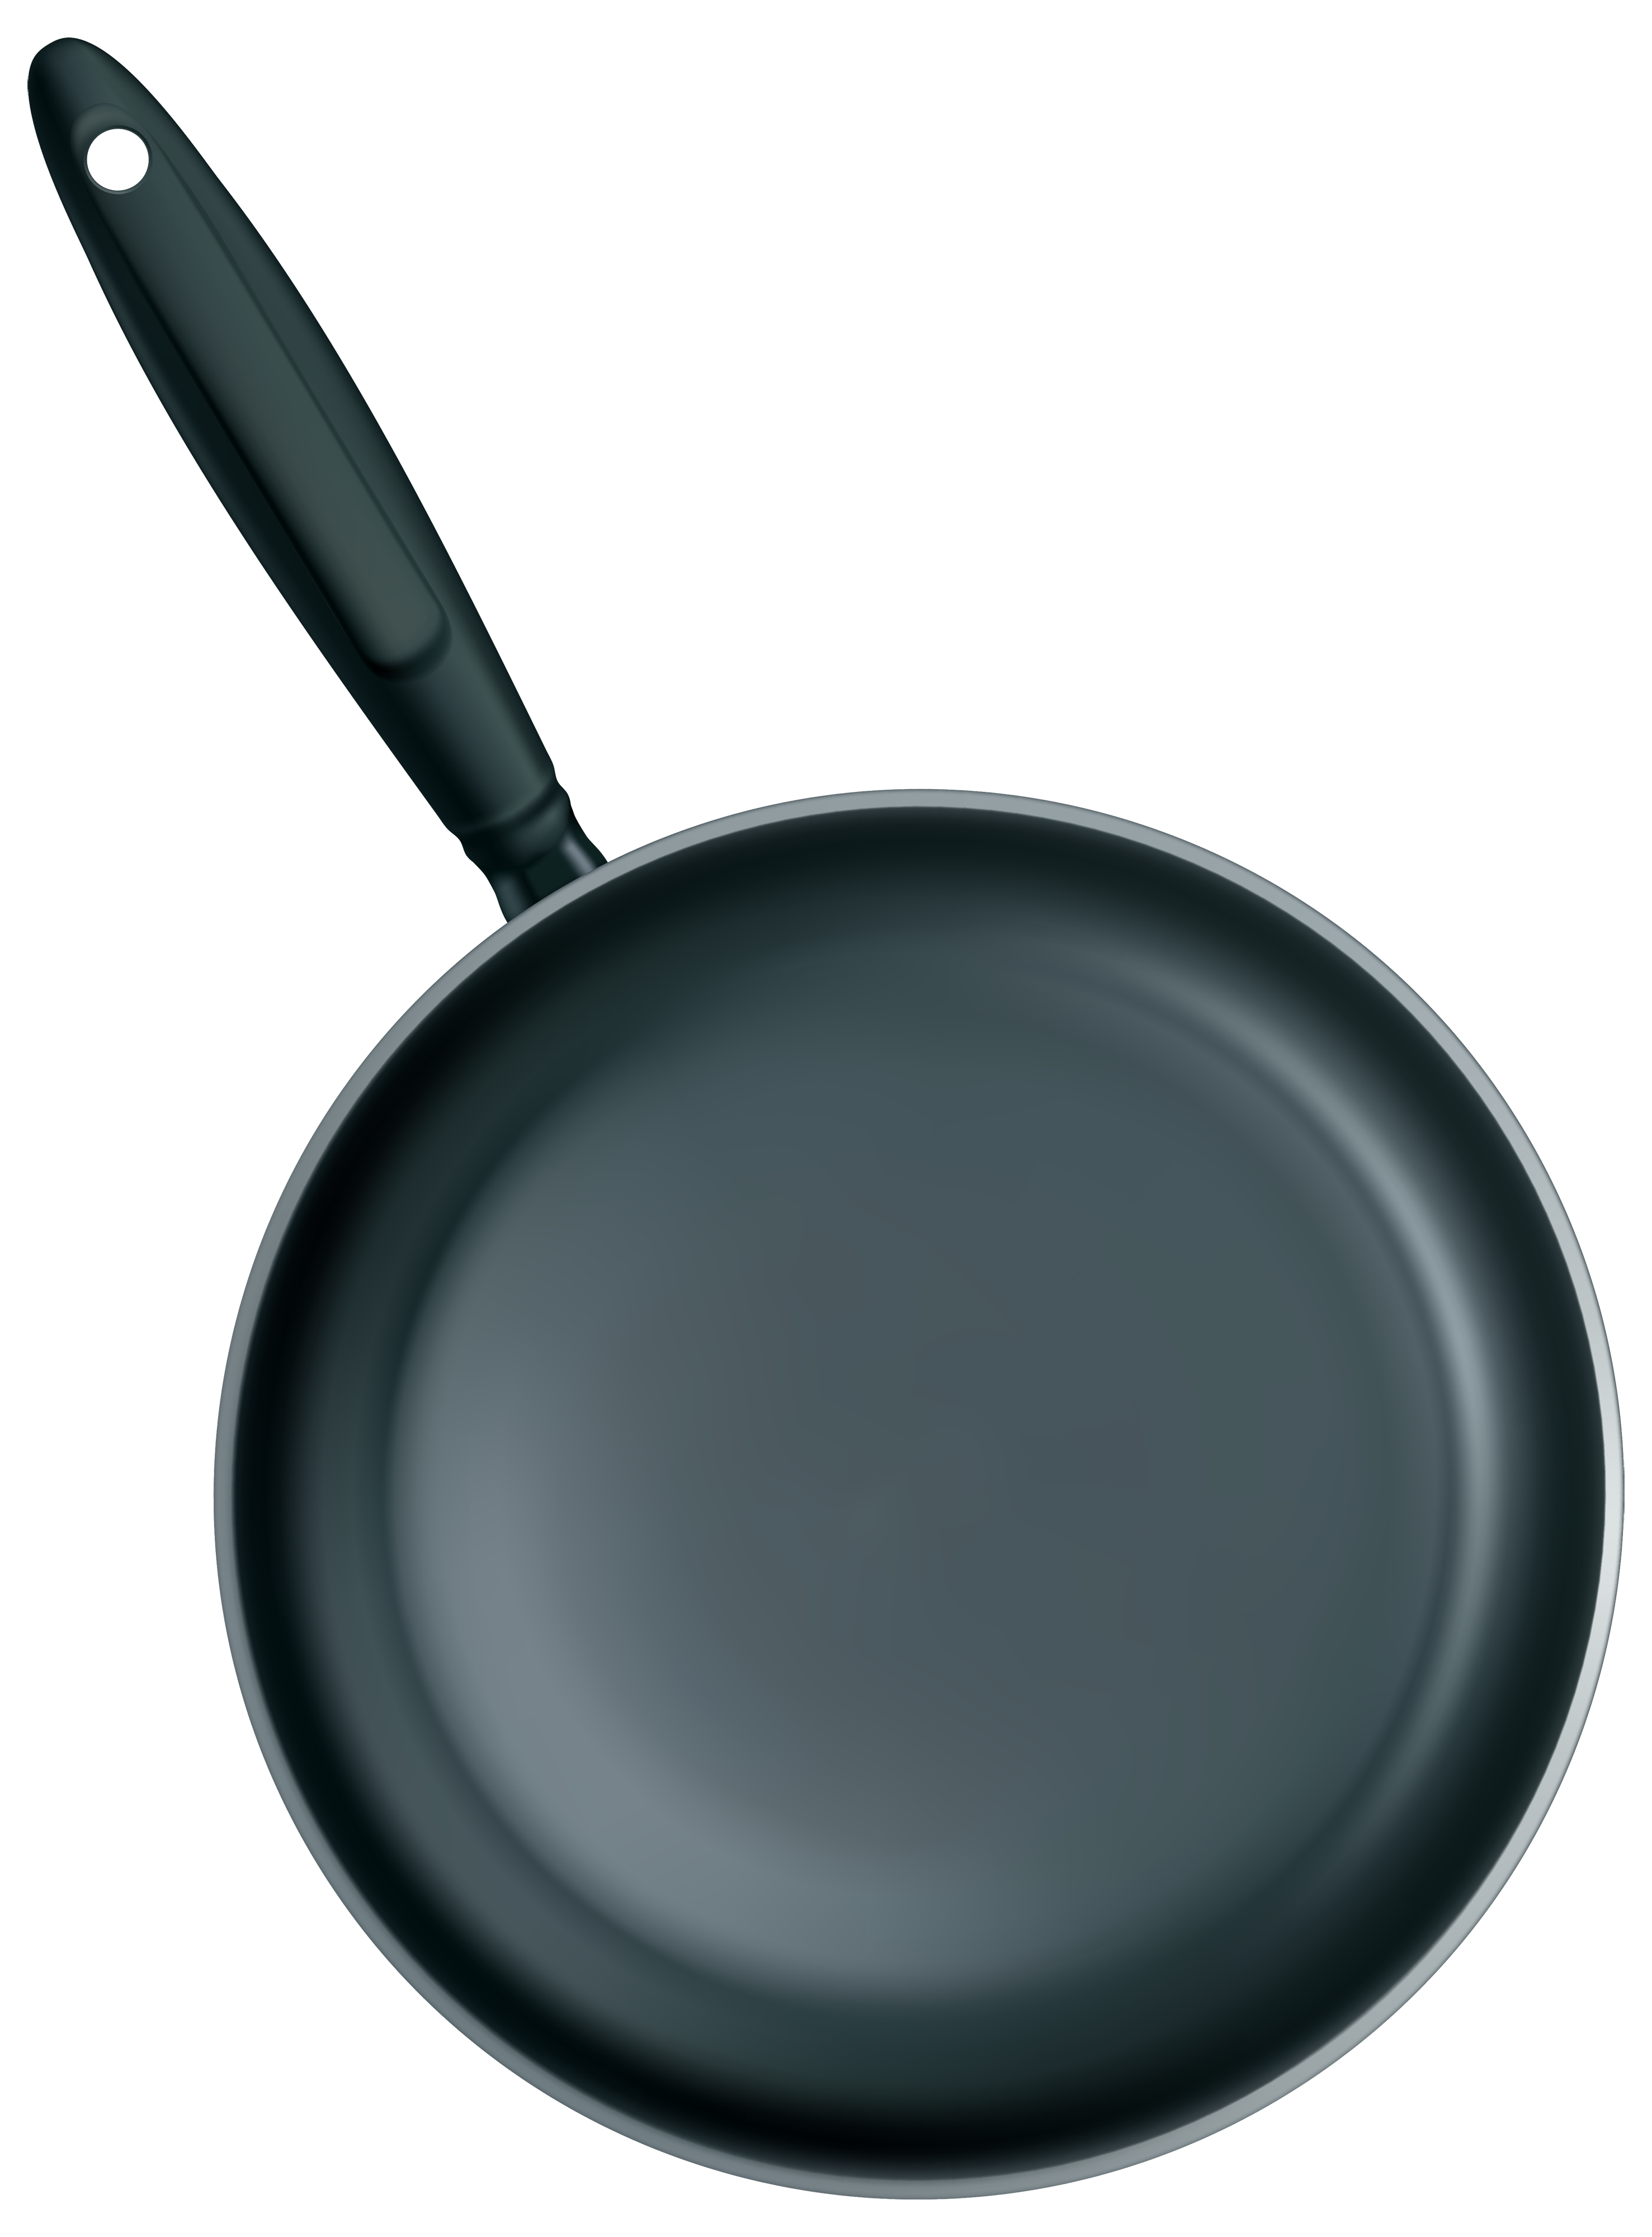 Frying Pan Png Image #43322 - Frying Pan, Transparent background PNG HD thumbnail